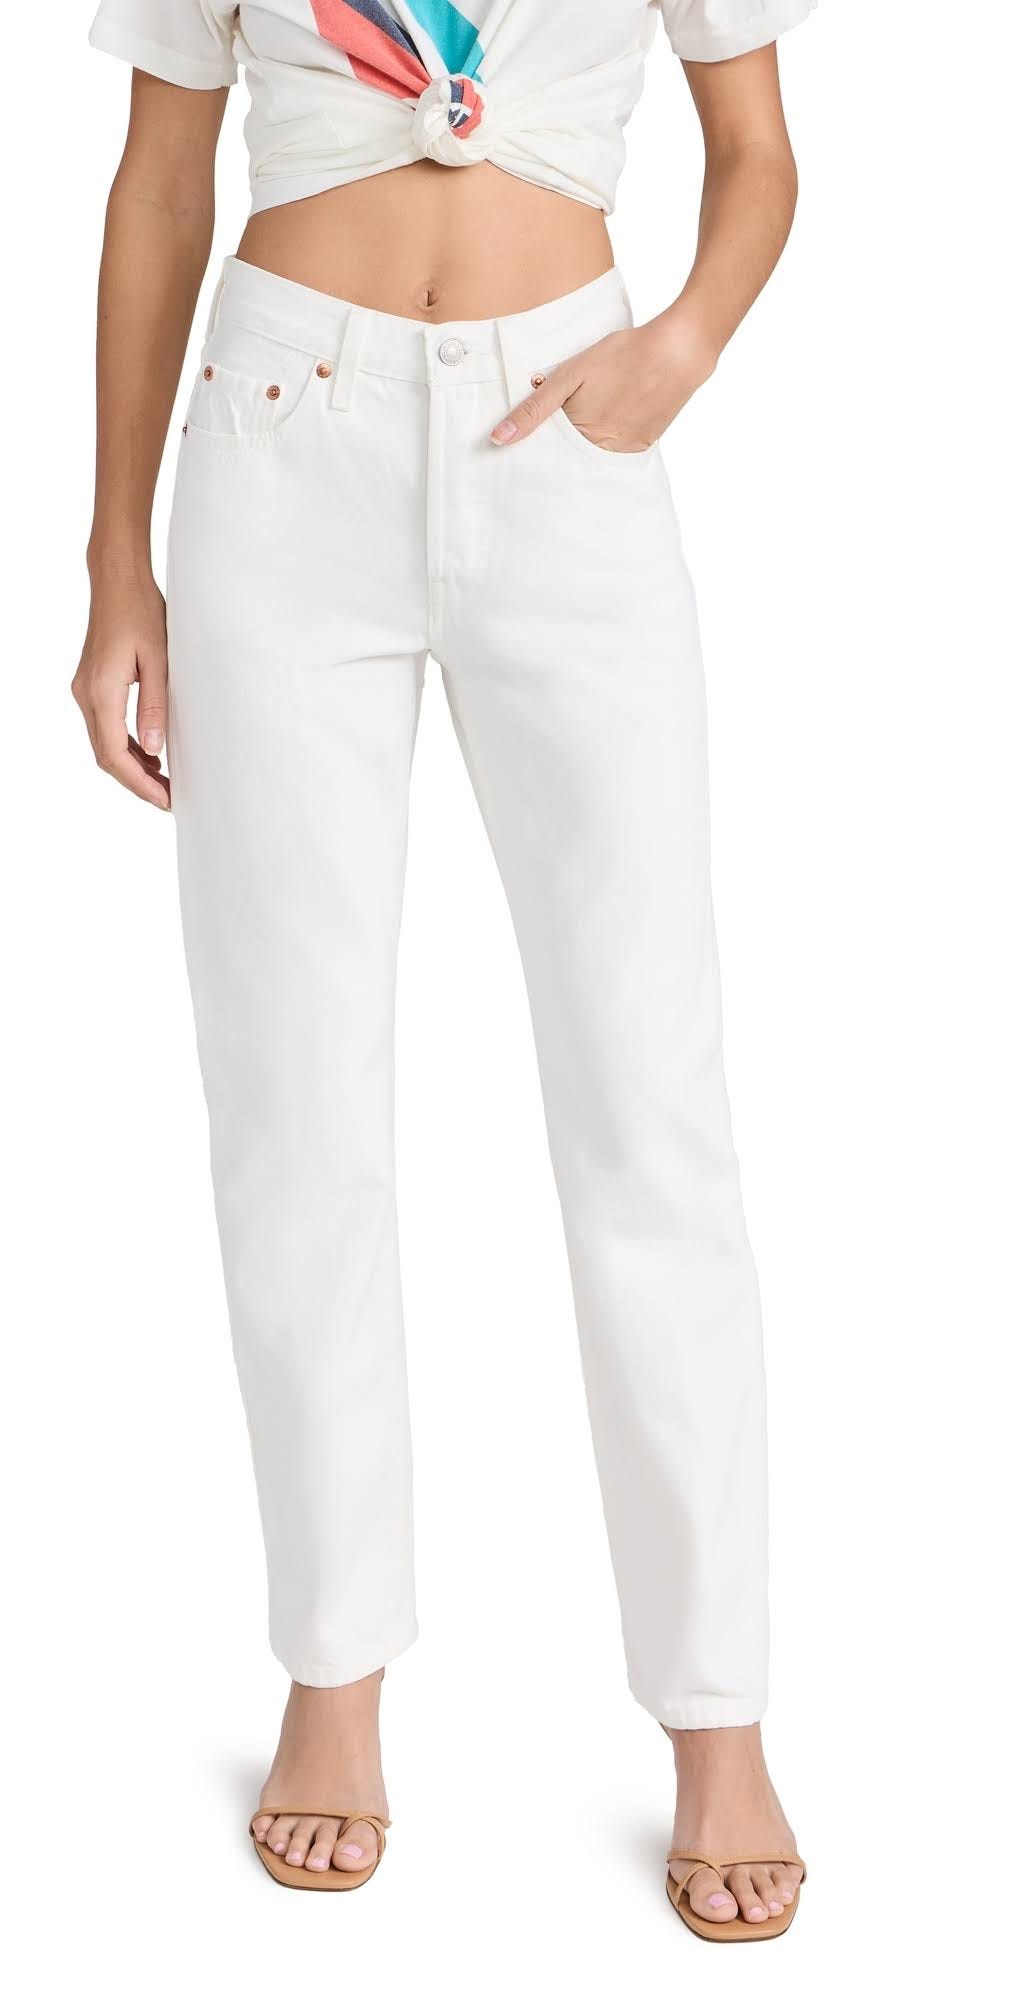 Classic Levi's White 501 Original Fit Jeans | Image